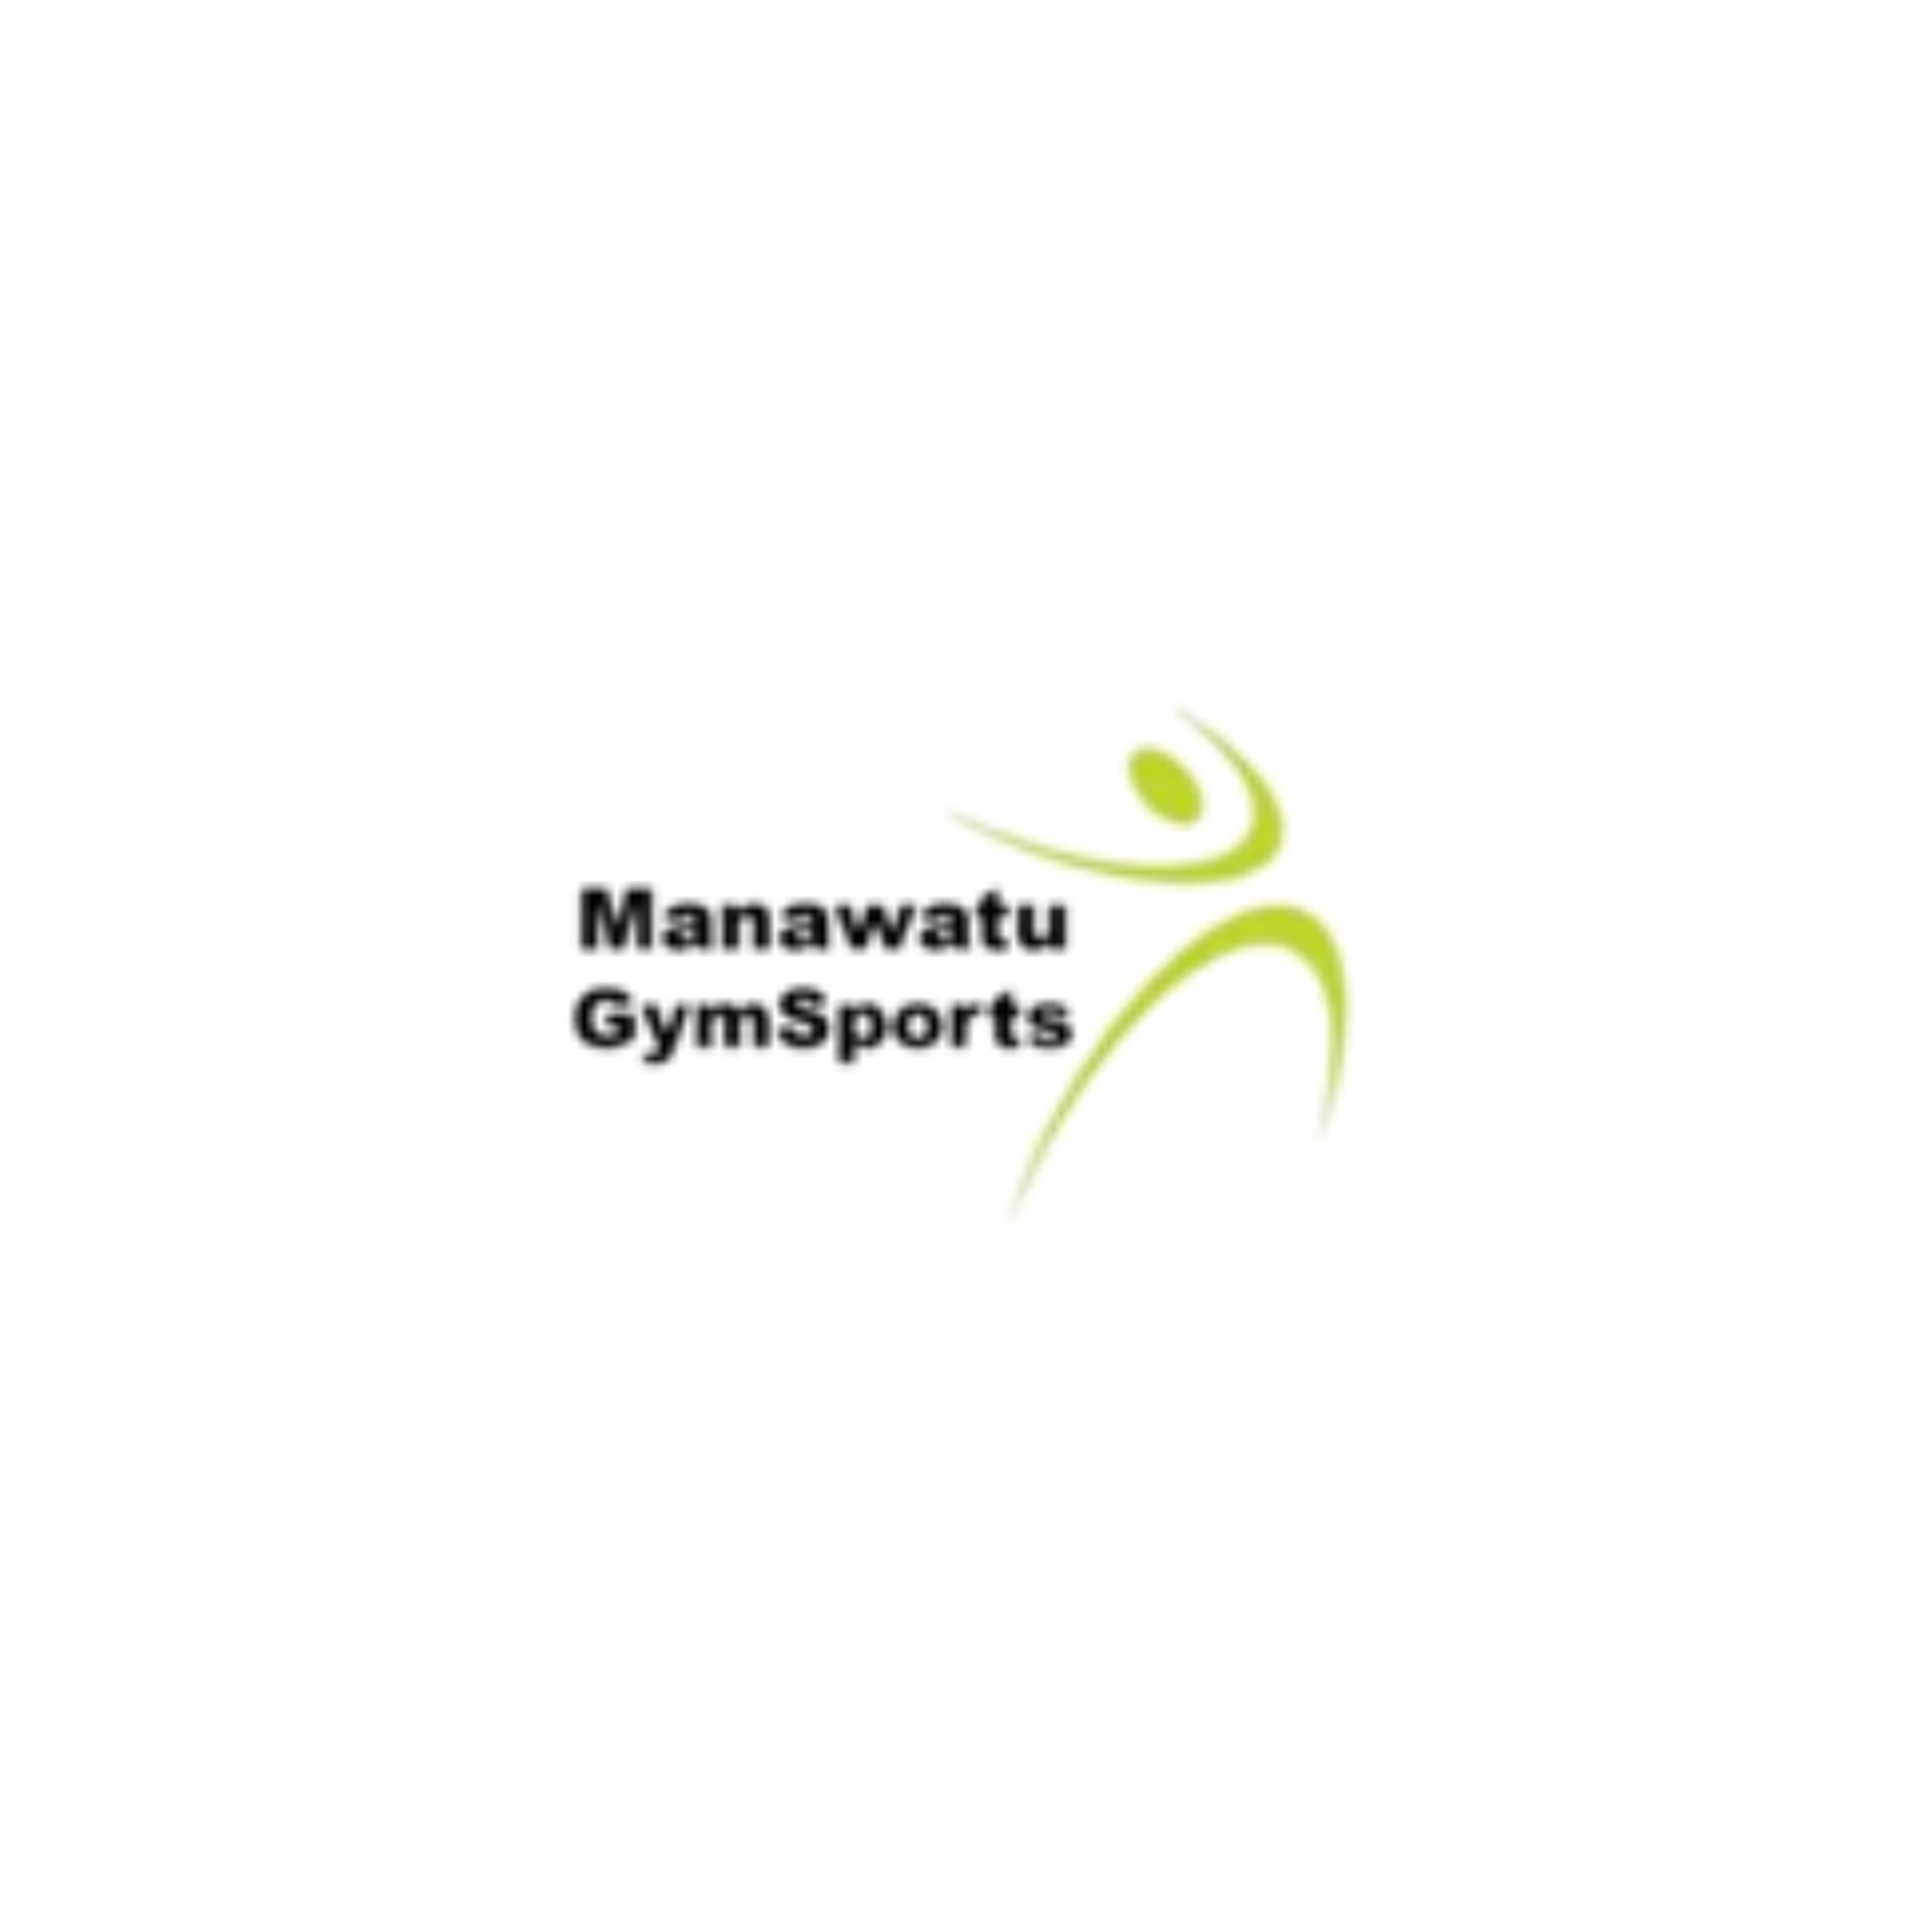 Manawatu GymSports